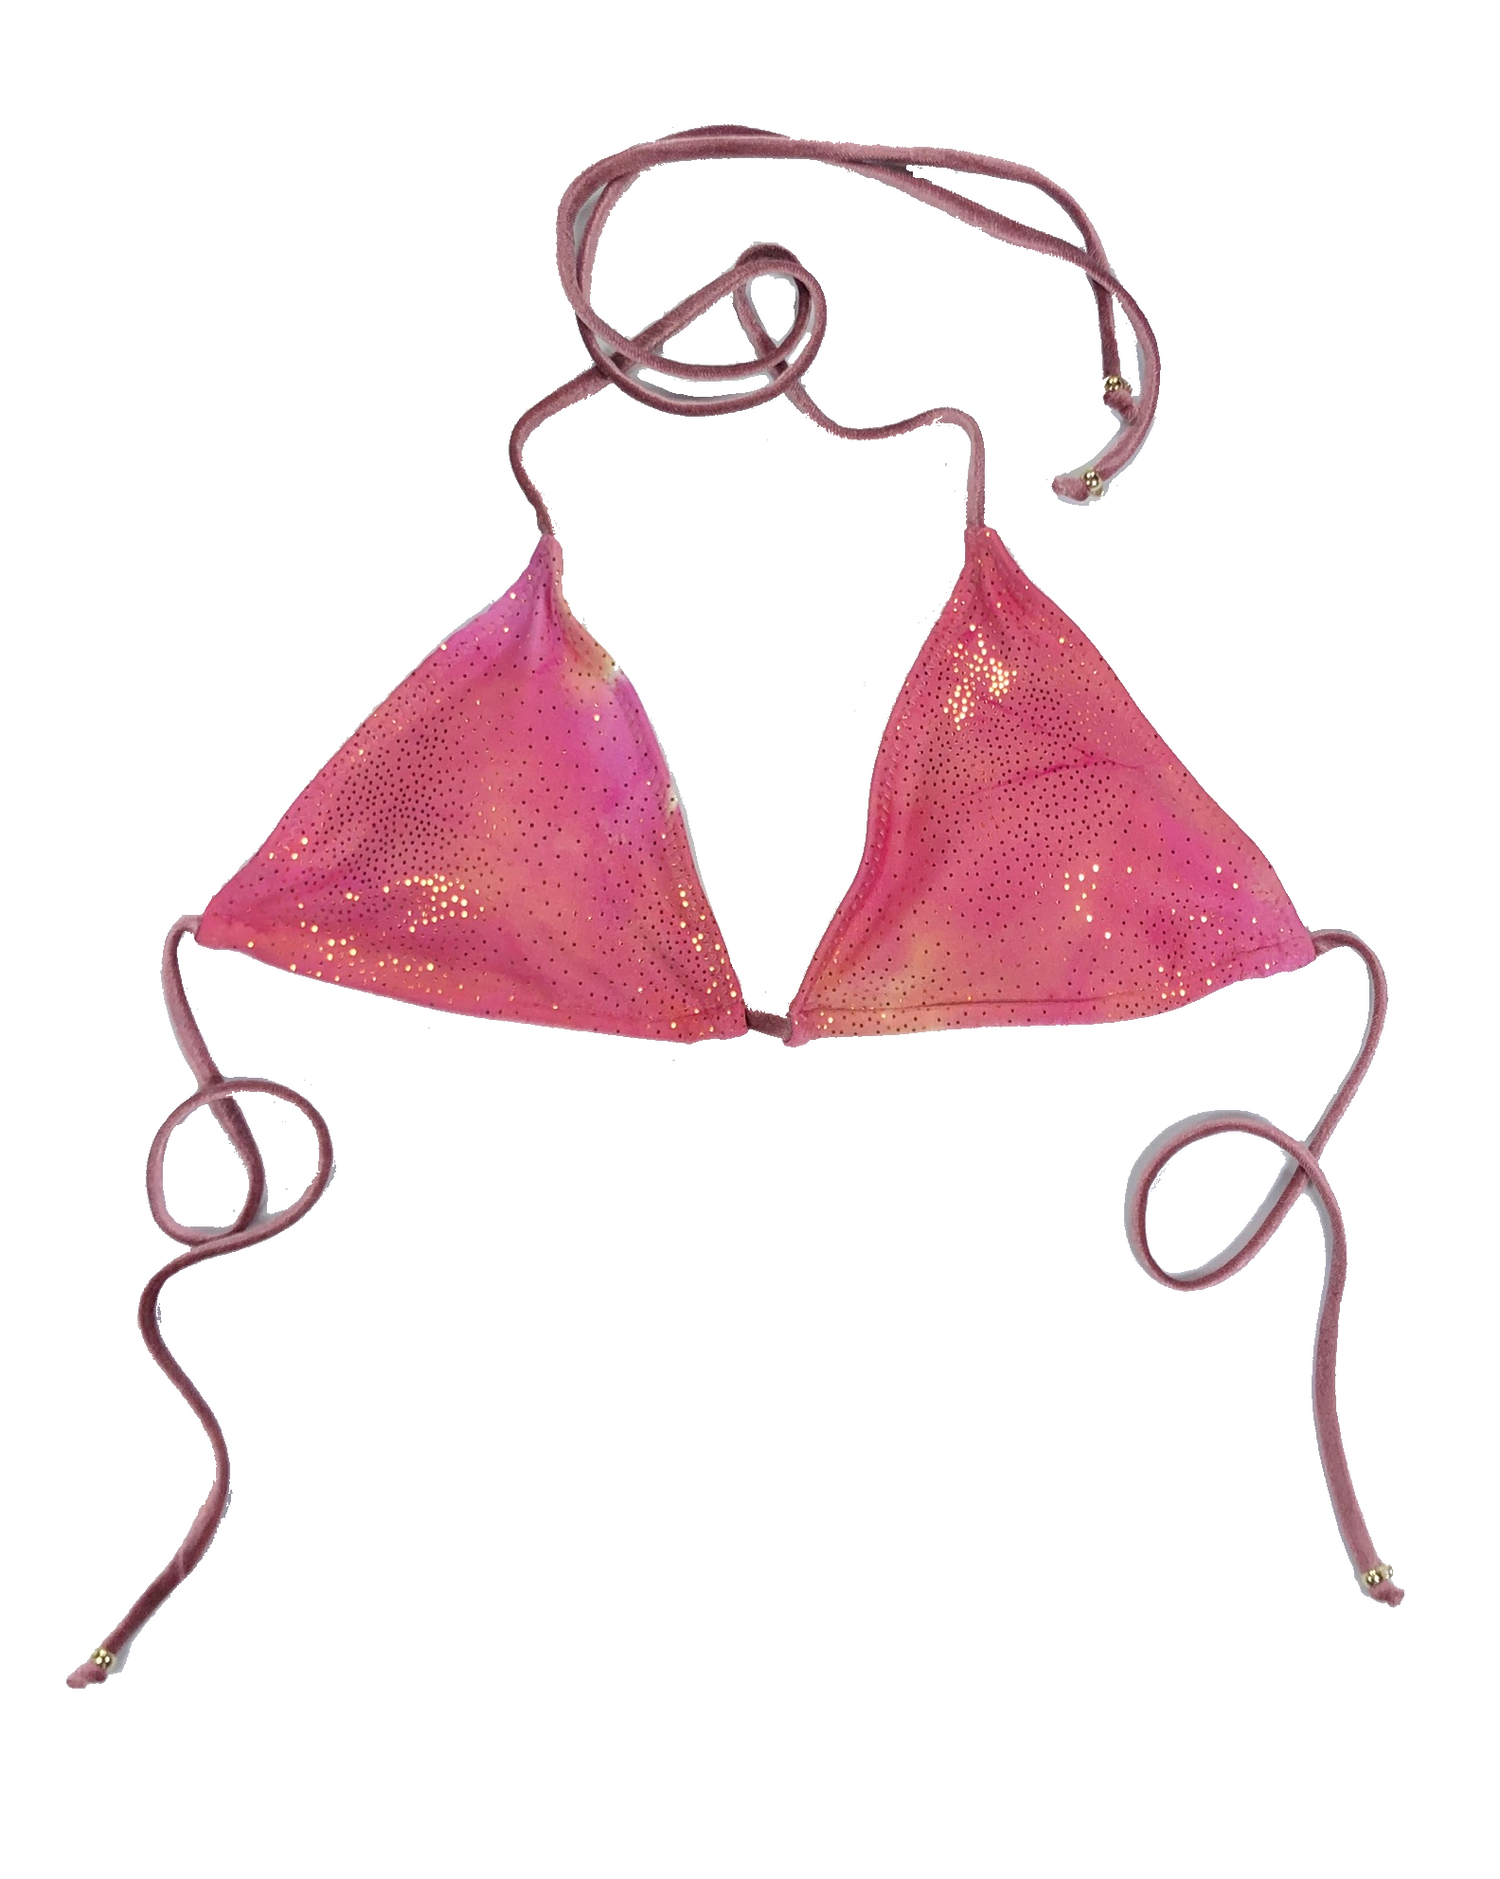 wendolin-designs - Wendolin Designs - Bikini Top - Triangular Bikini  Top - Color Pink and gold tie-dye design